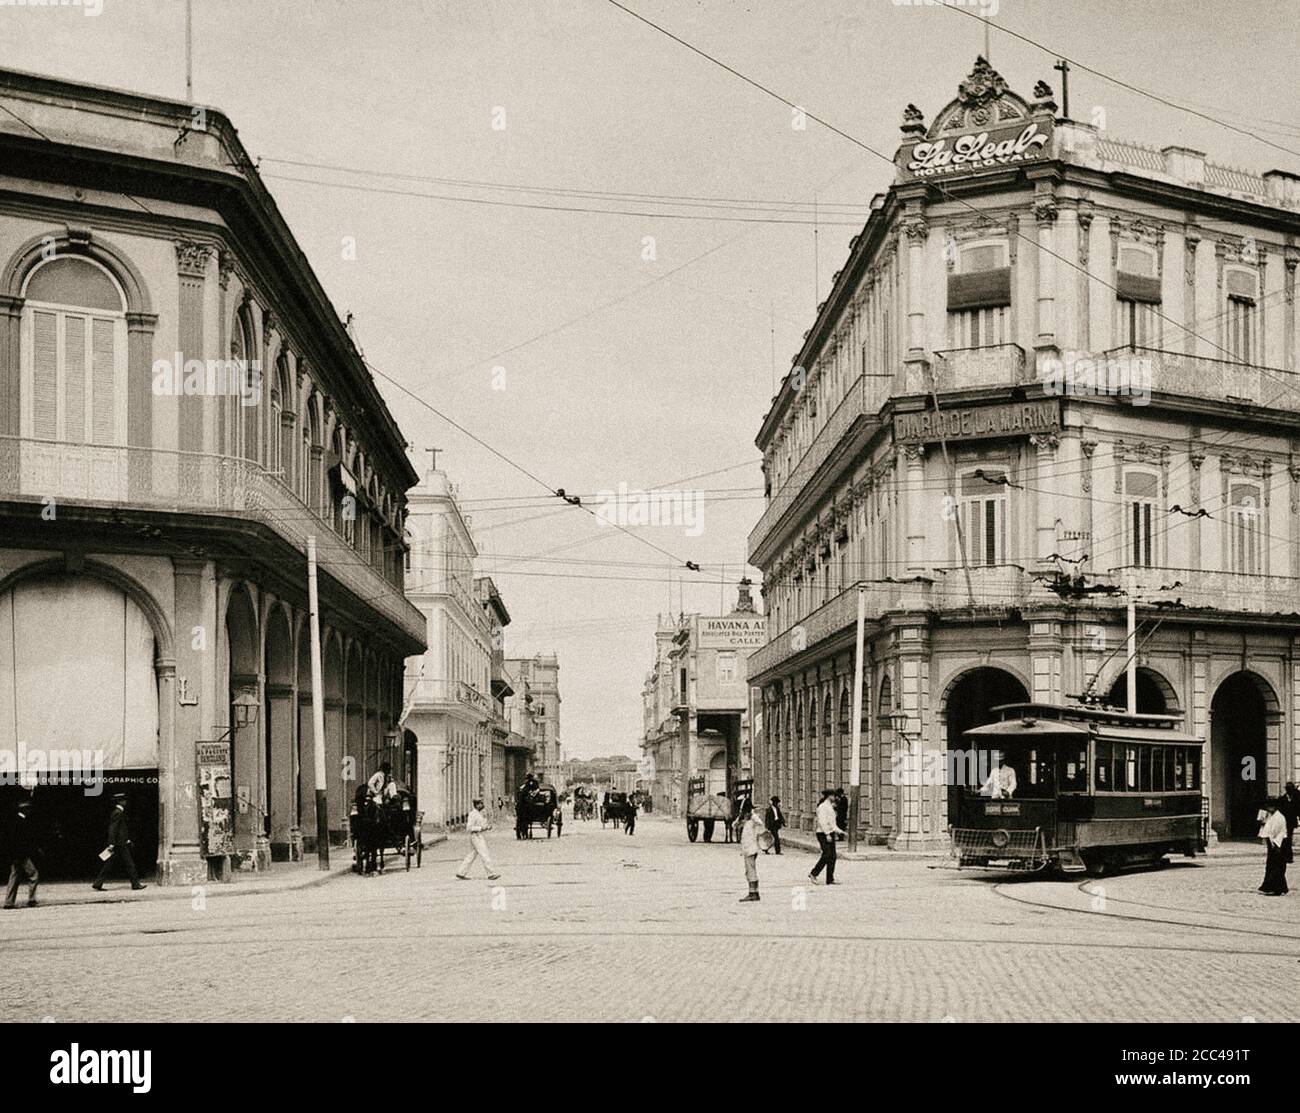 La vieille Havane. Avenida Zulueta. Cuba. 1900 Banque D'Images